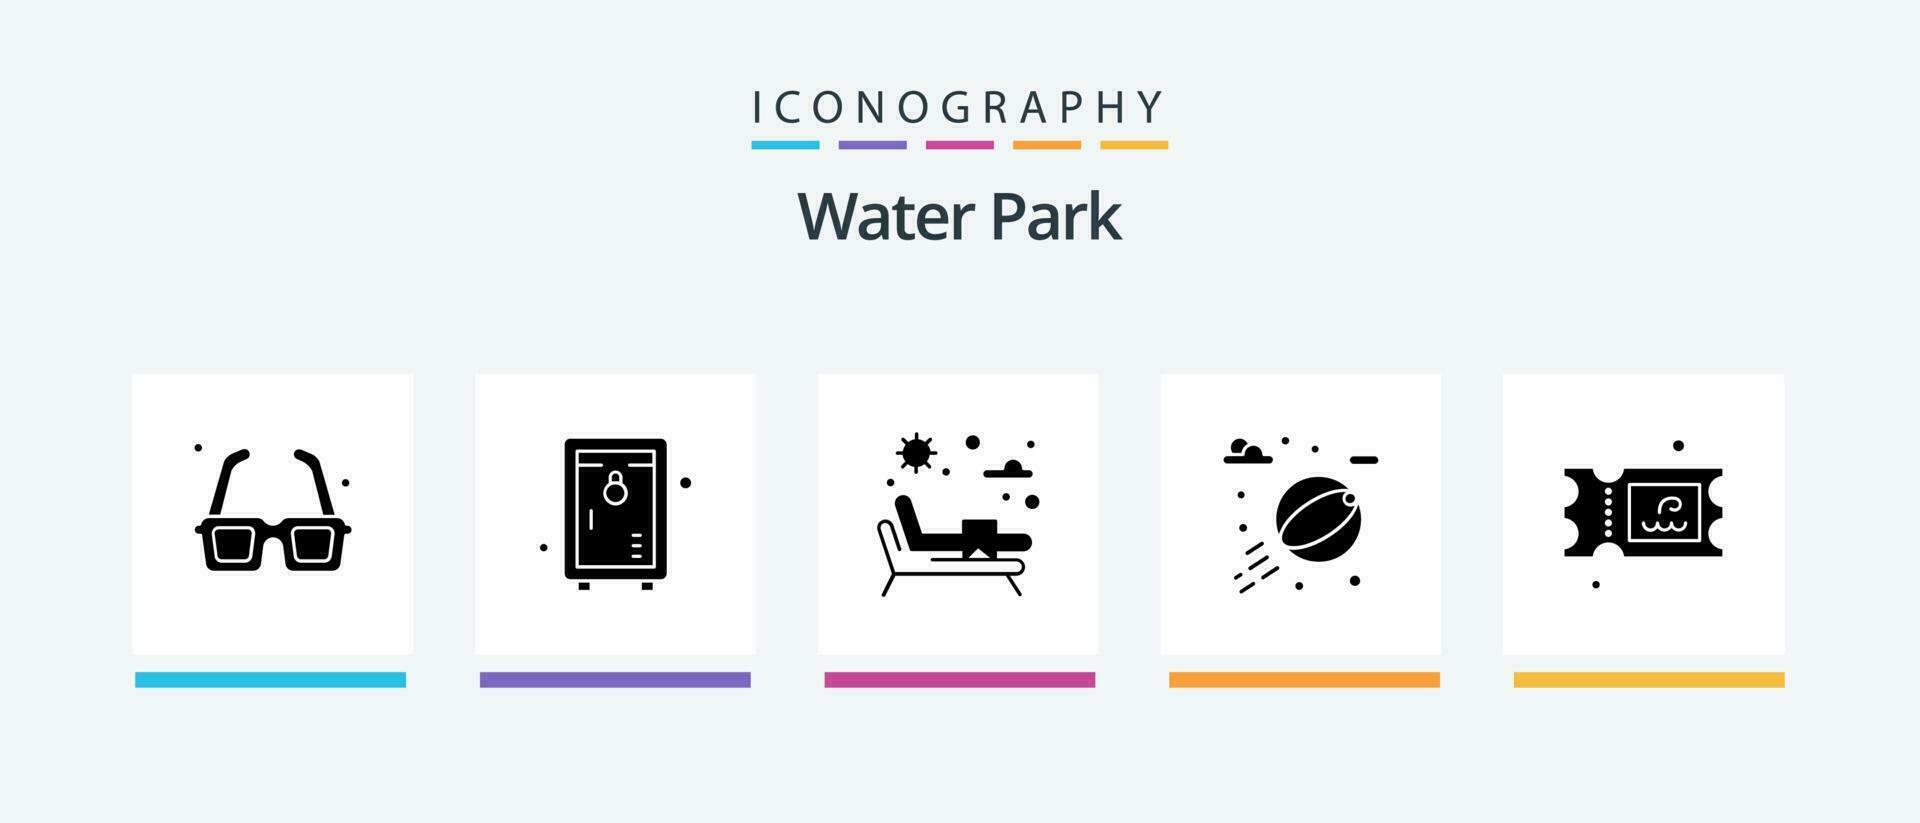 Water Park Glyph 5 Icon Pack Including park. ticket. garden. park. beach ball. Creative Icons Design vector